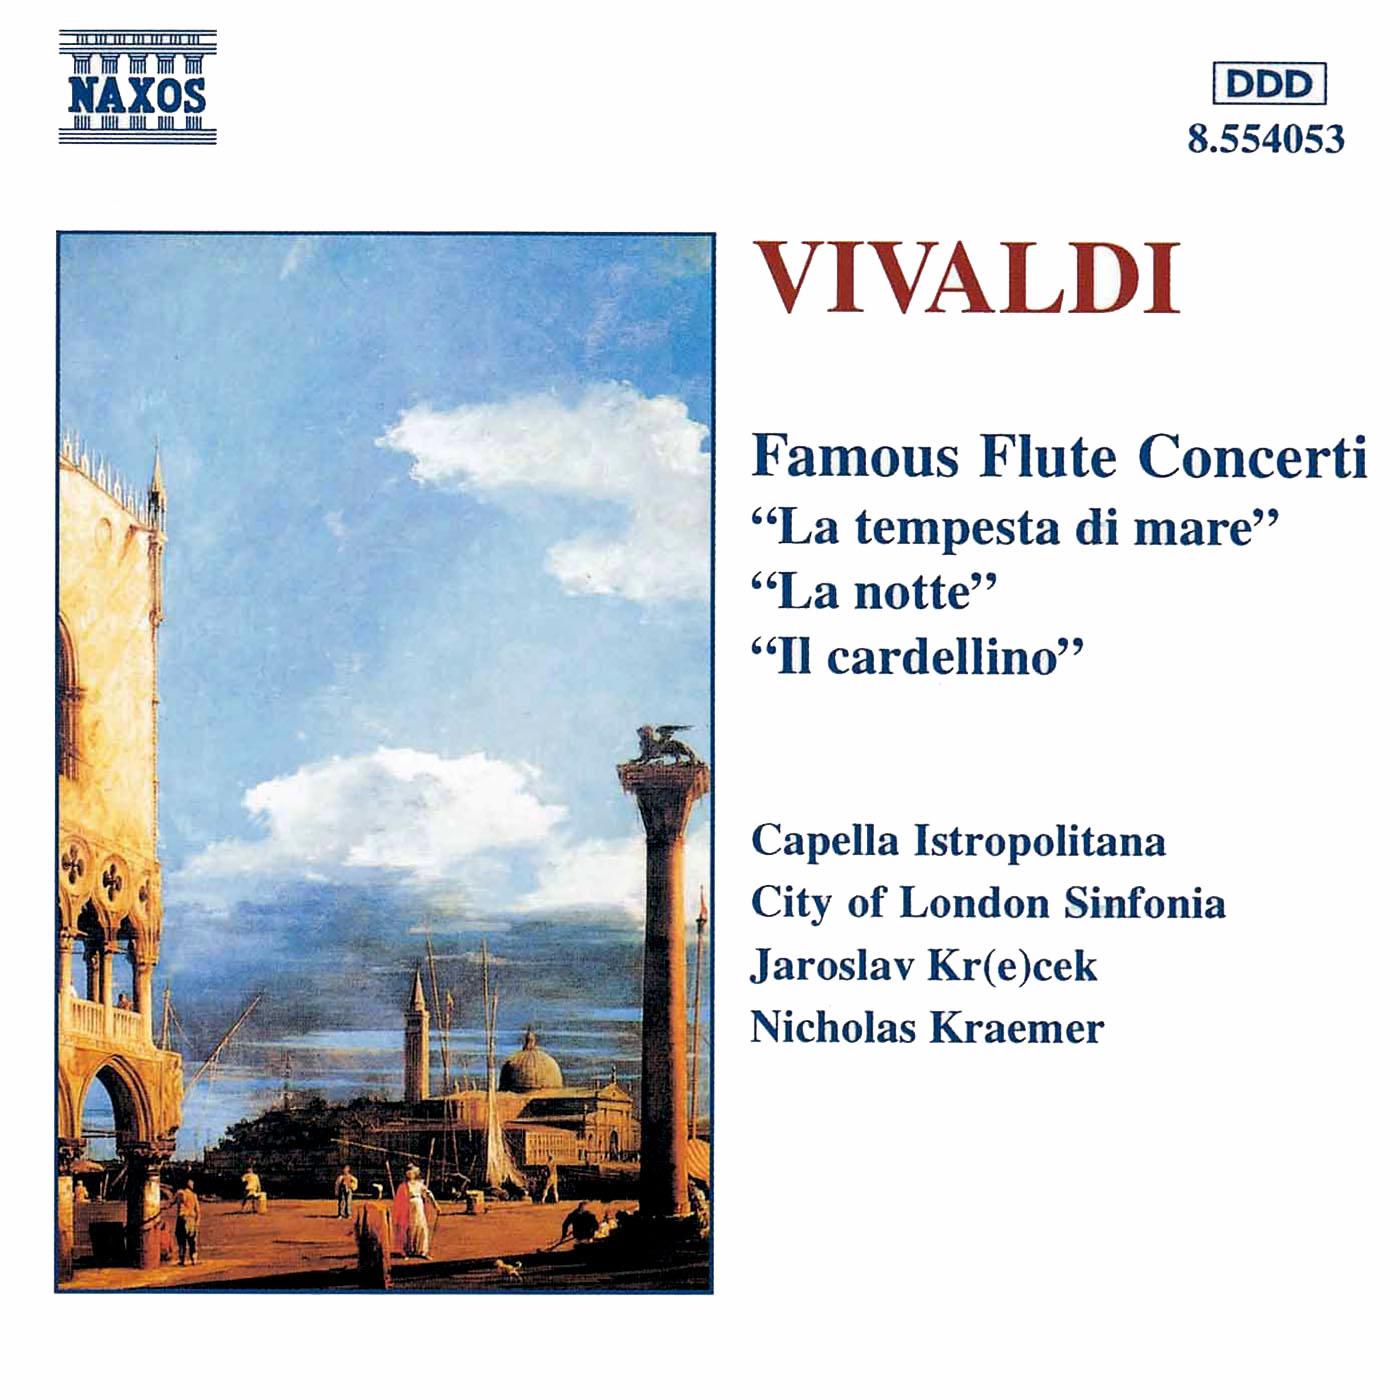 Flautino Concerto in C Major, RV 444*: II. Largo